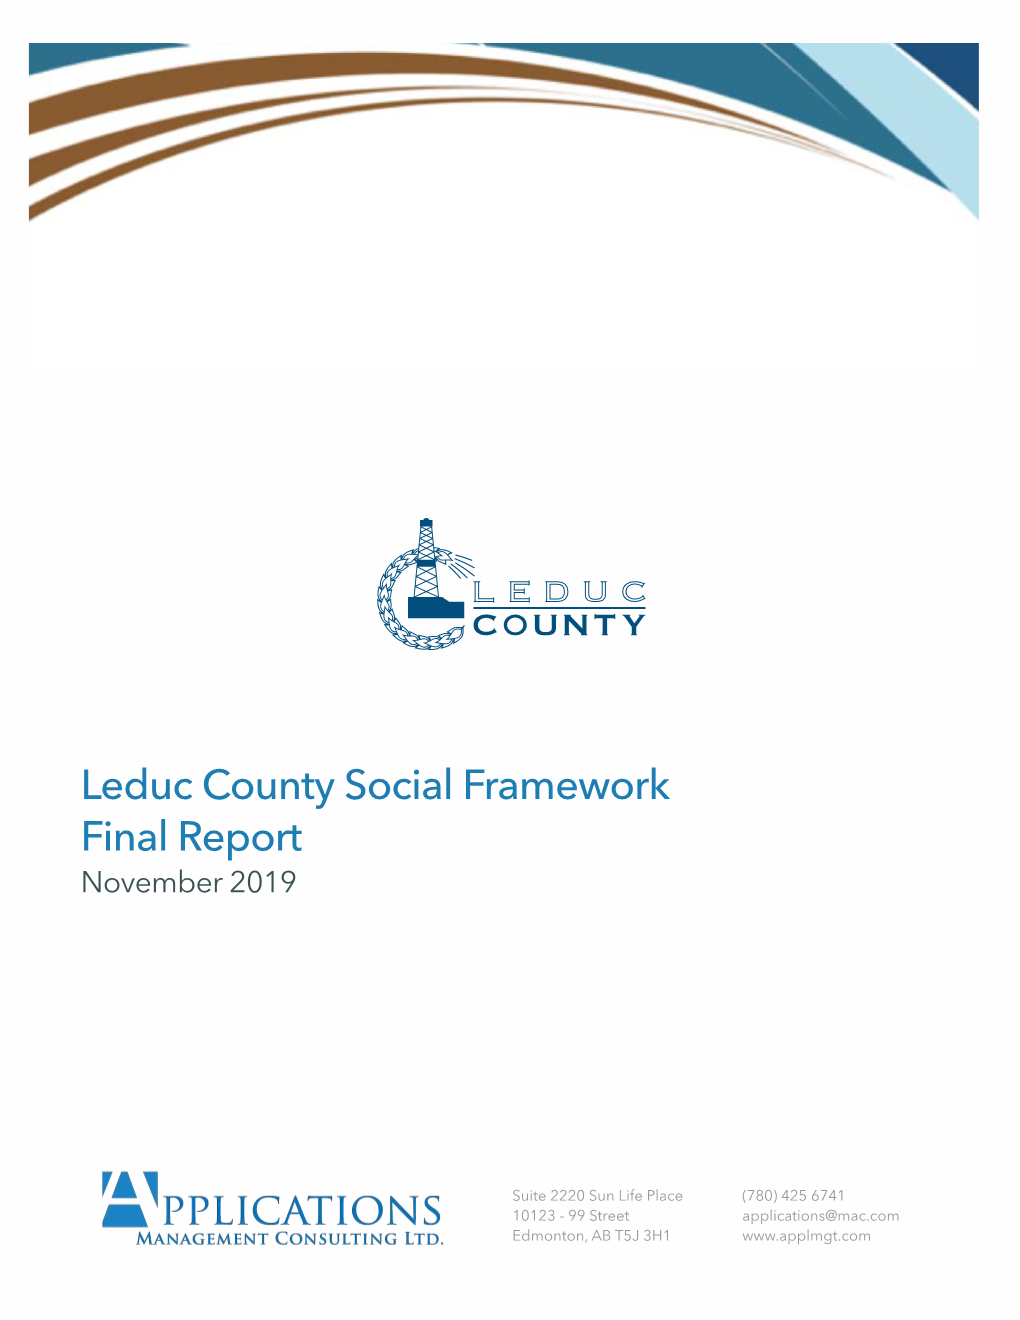 Leduc County Social Framework Final Report November 2019